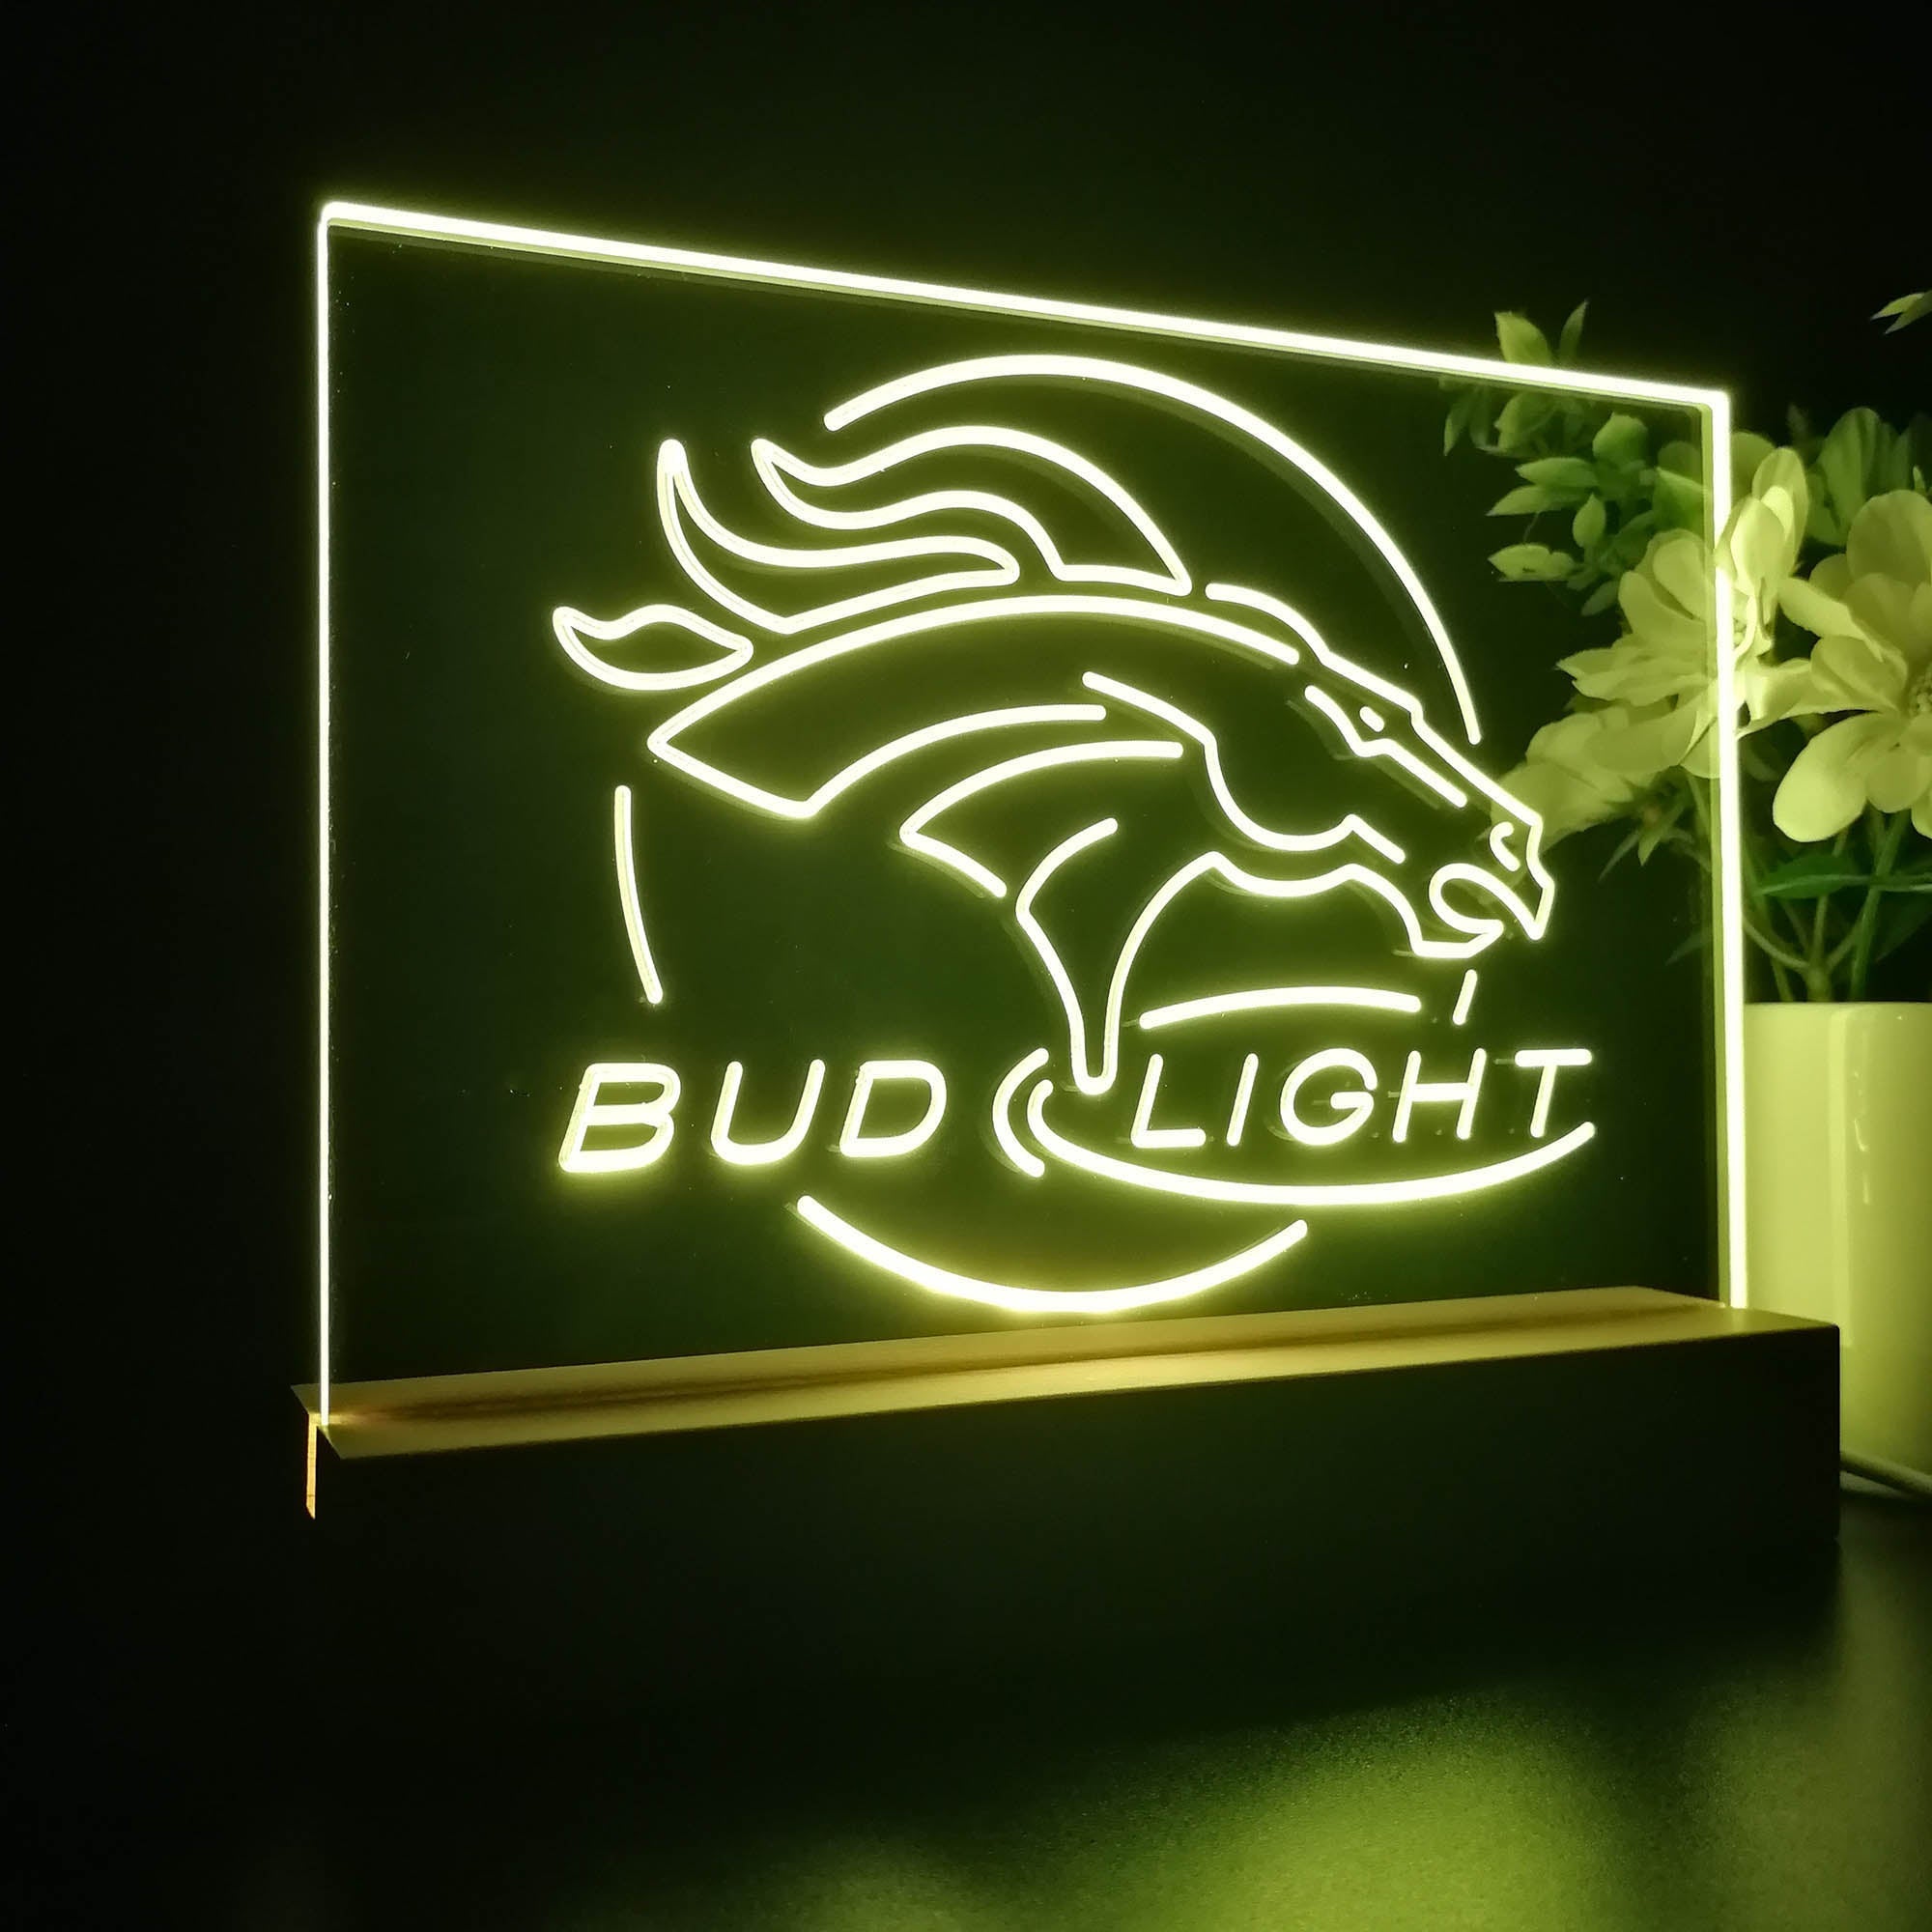 Broncos Denver Bud Light 3D Illusion Night Light Desk Lamp